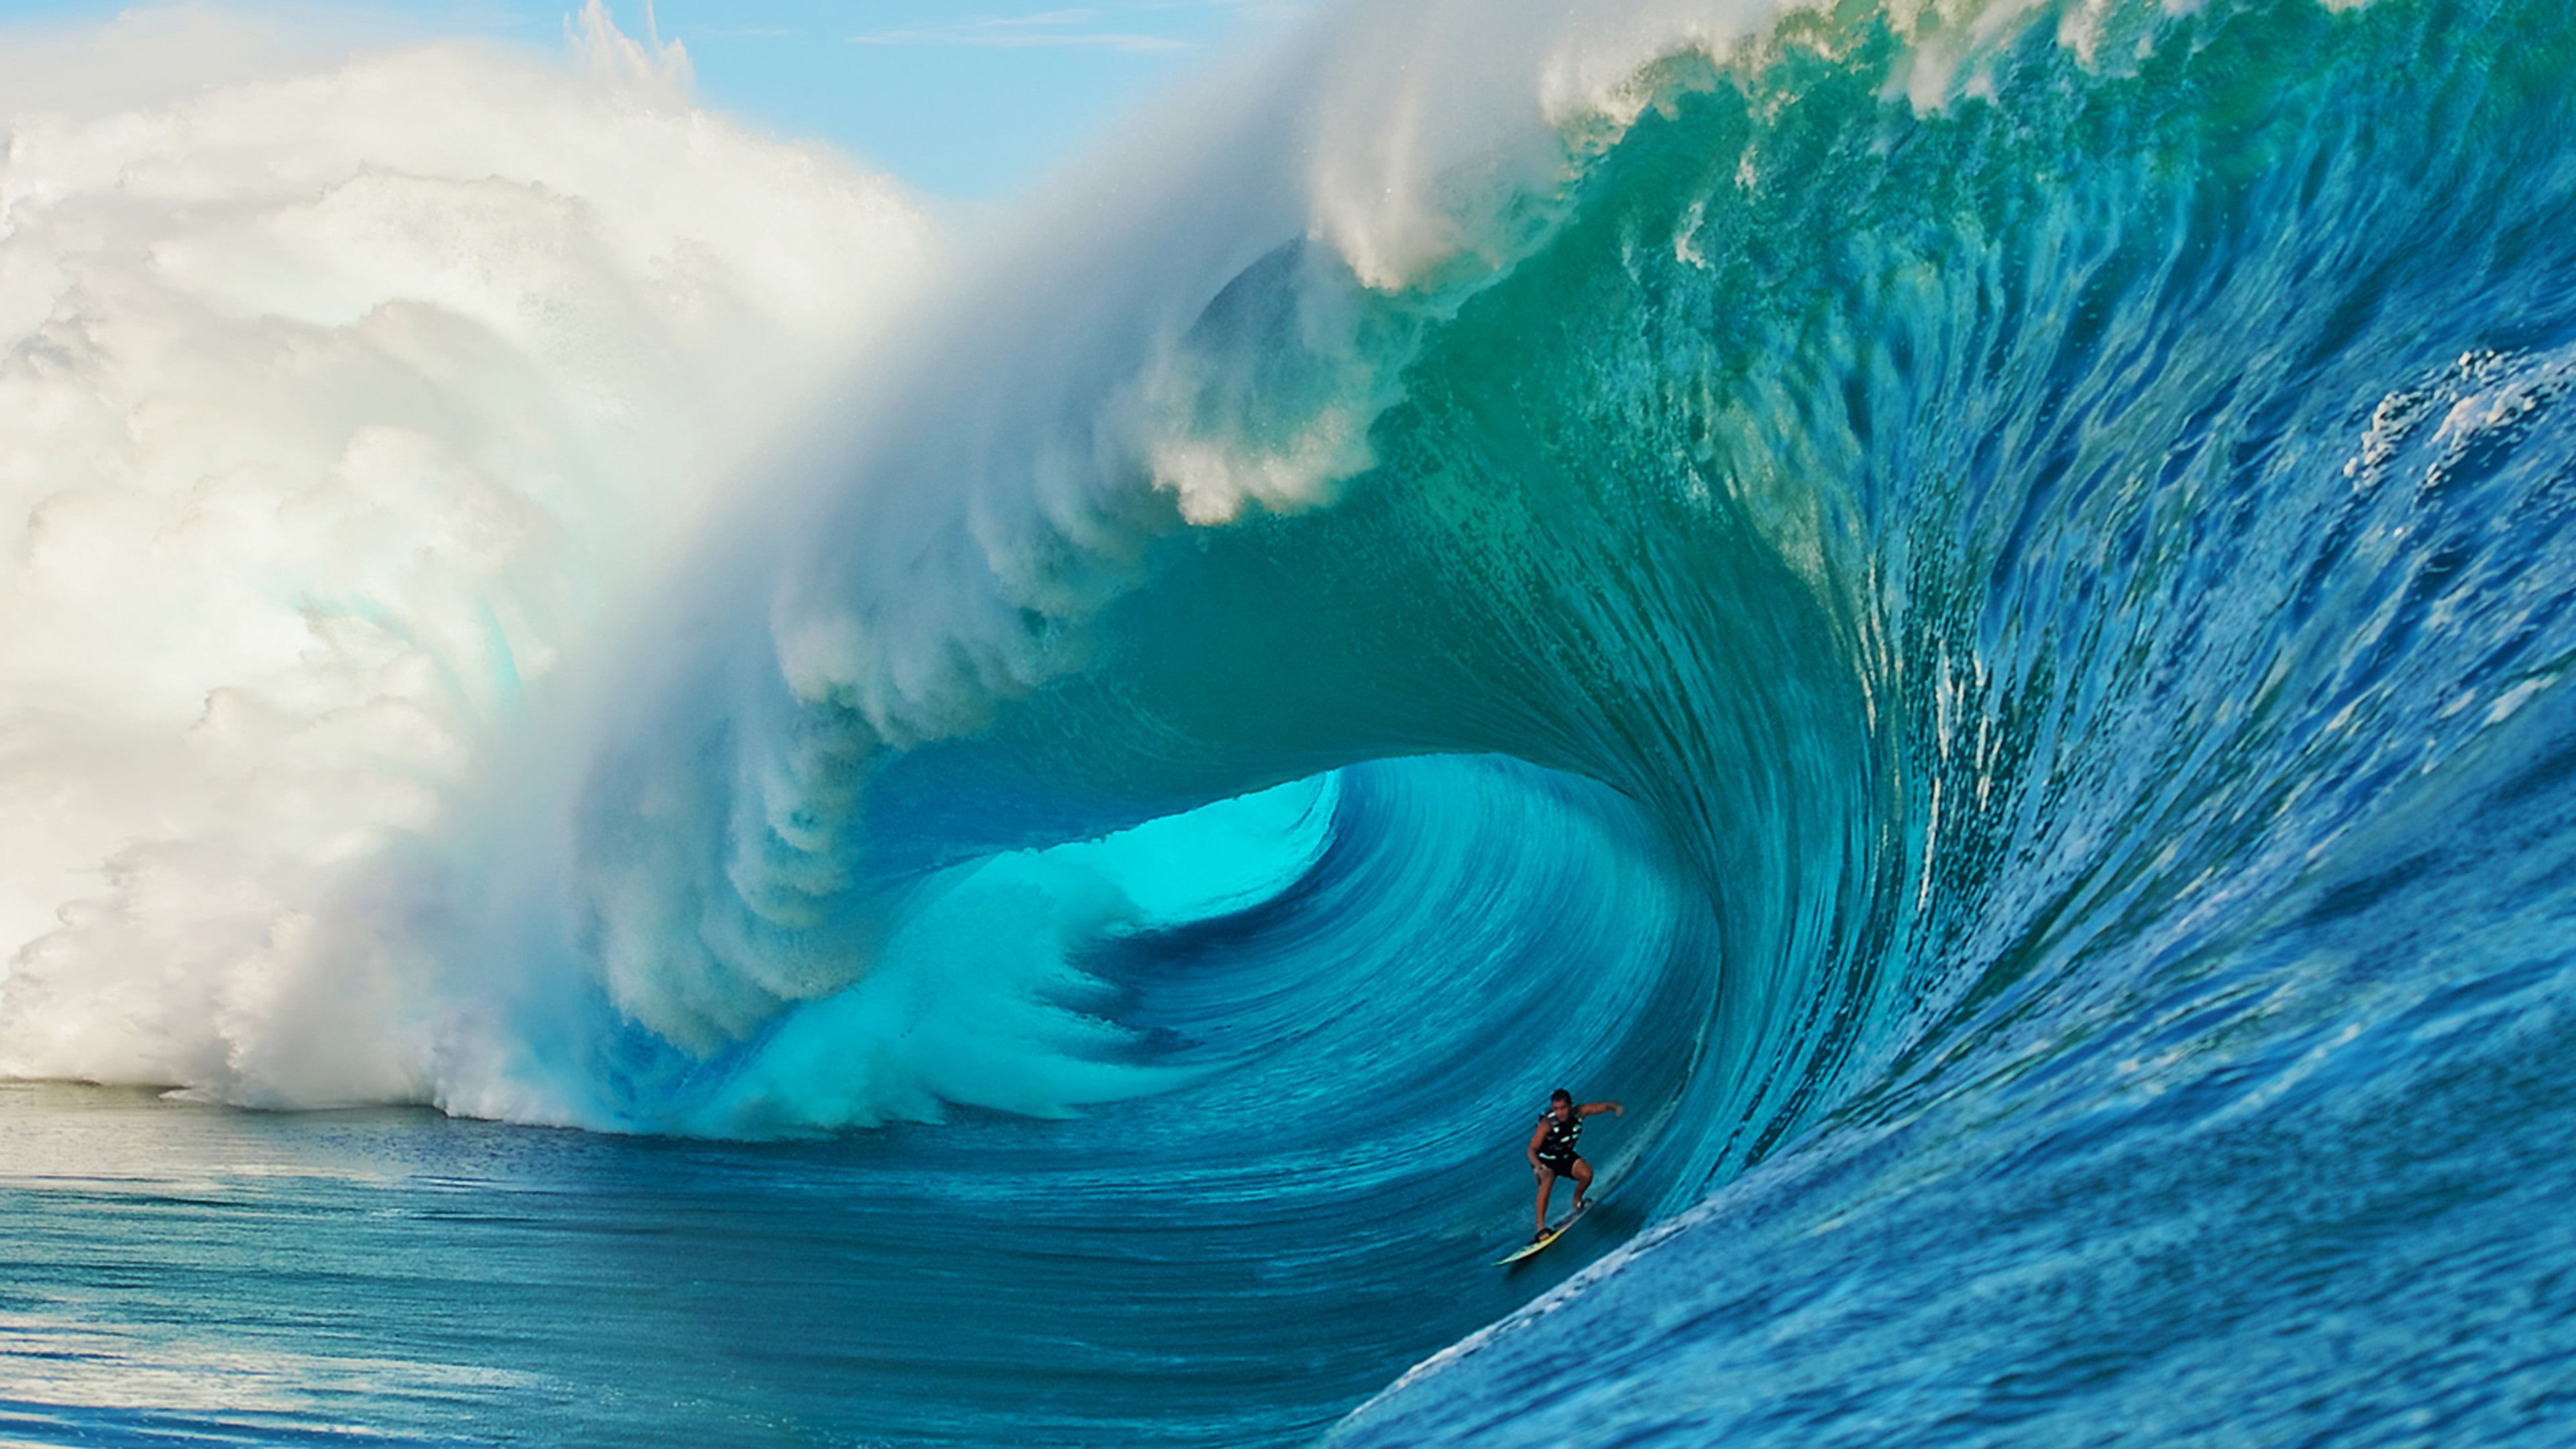 Surfing for Beginners Giant Wave Ocean Ultra HD Wallpaper for Desktop Mobile Phones and lap×2160 K #wallp. Surfing waves, Giant waves, Big wave surfing